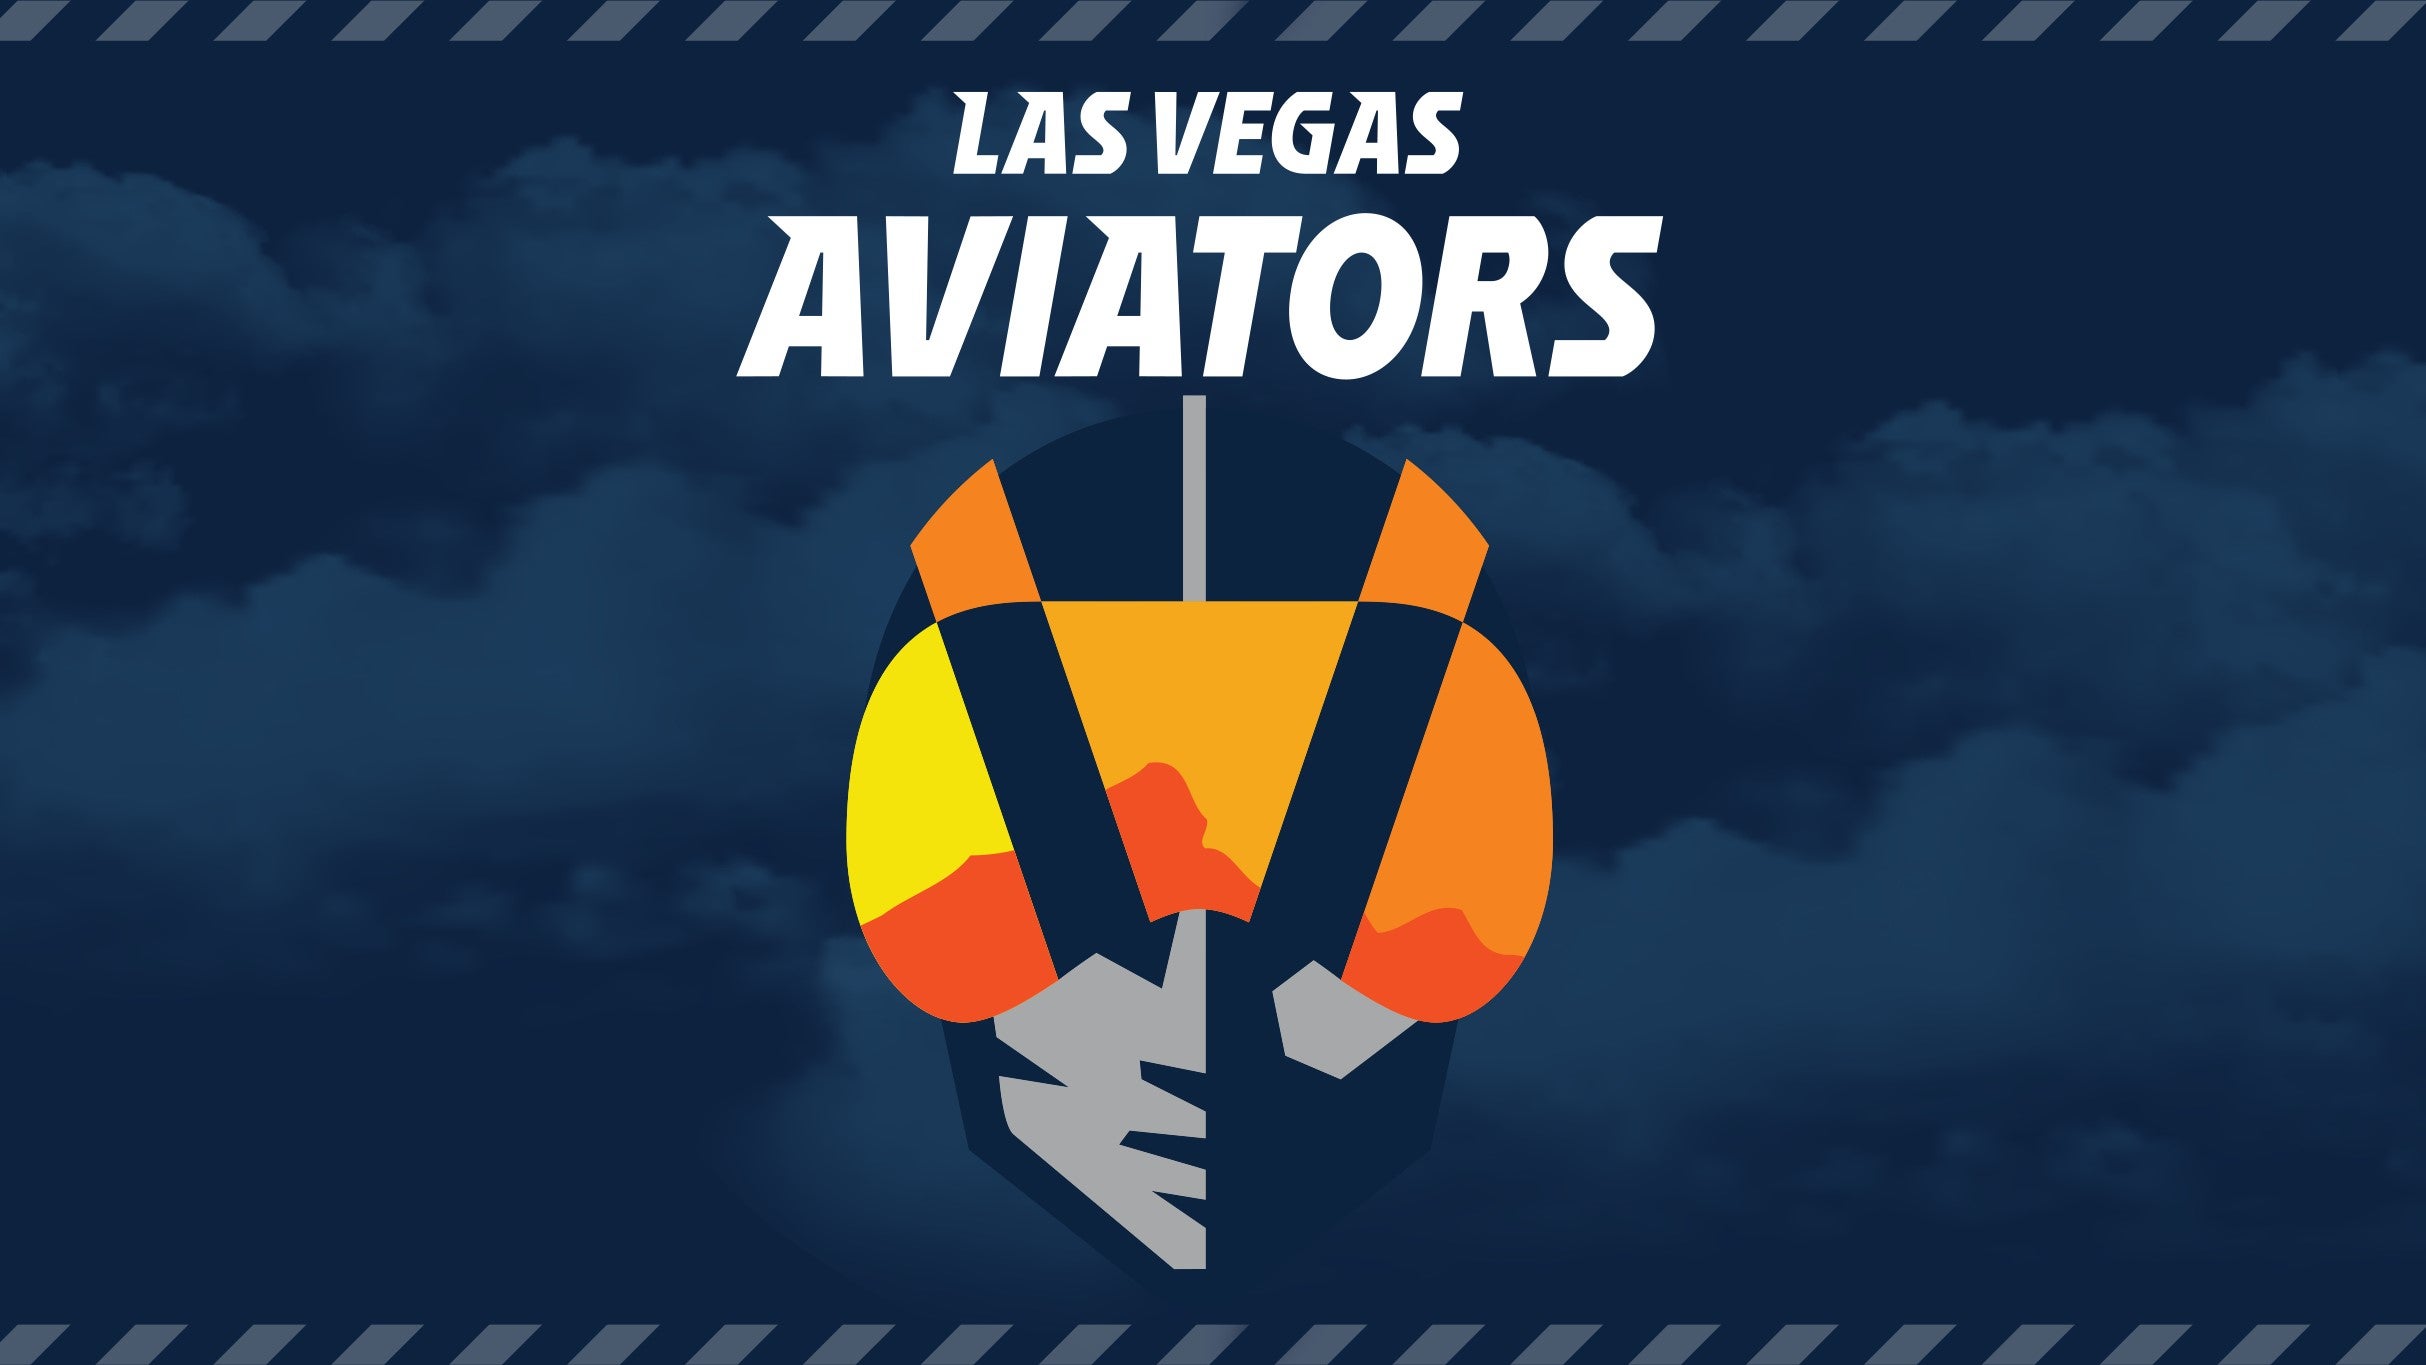 Las Vegas Aviators vs. El Paso Chihuahuas presales in Las Vegas